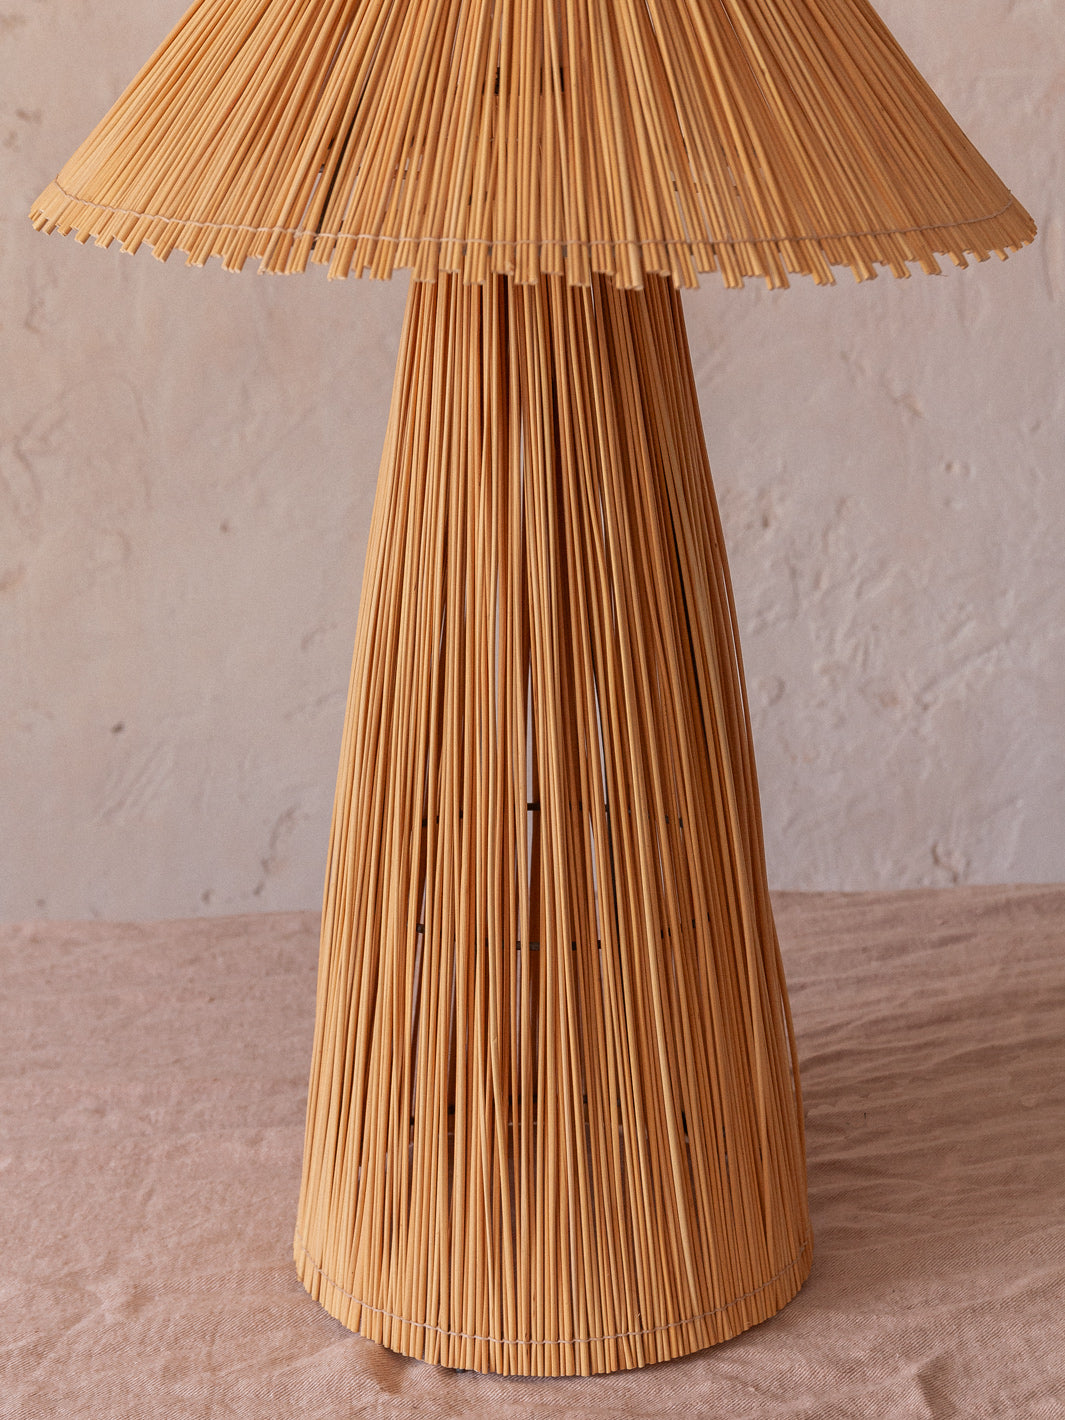 Tunisian handcrafted lamp